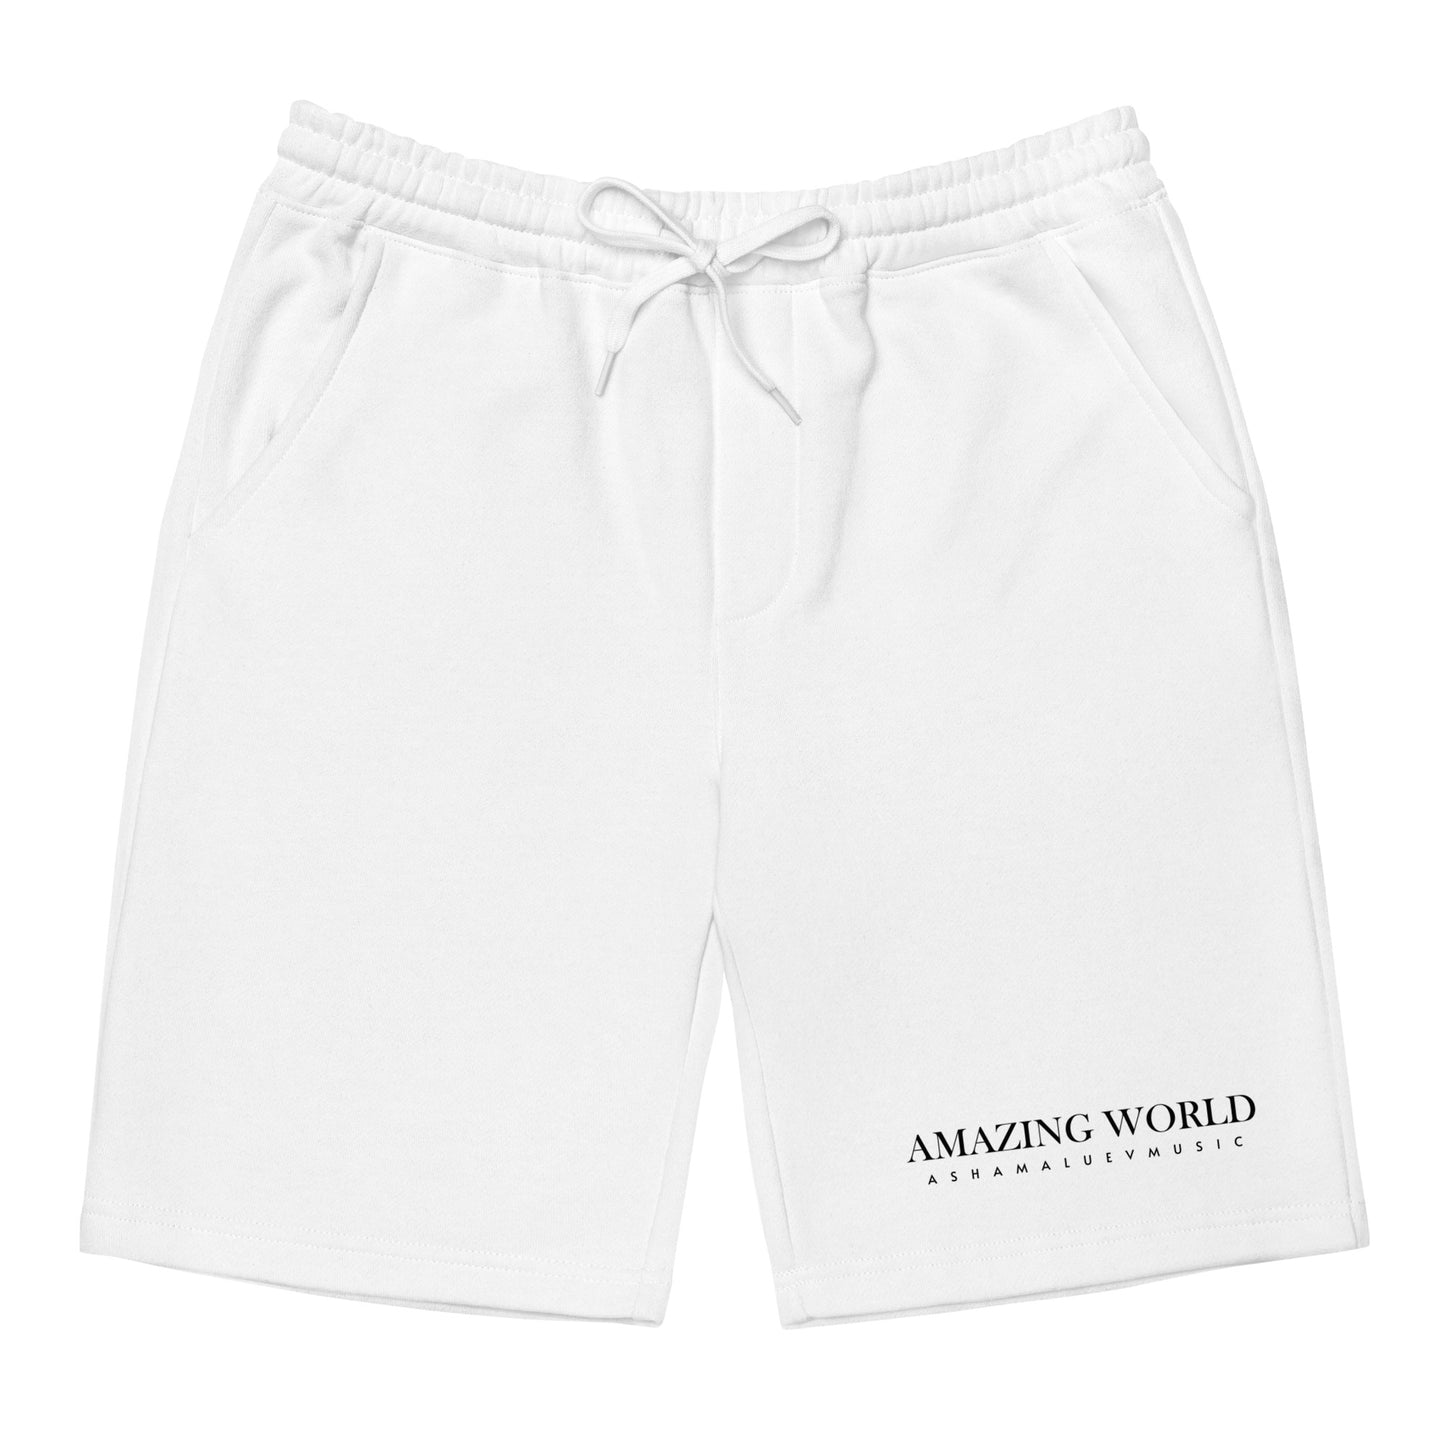 Men's Fleece Shorts "Amazing World"